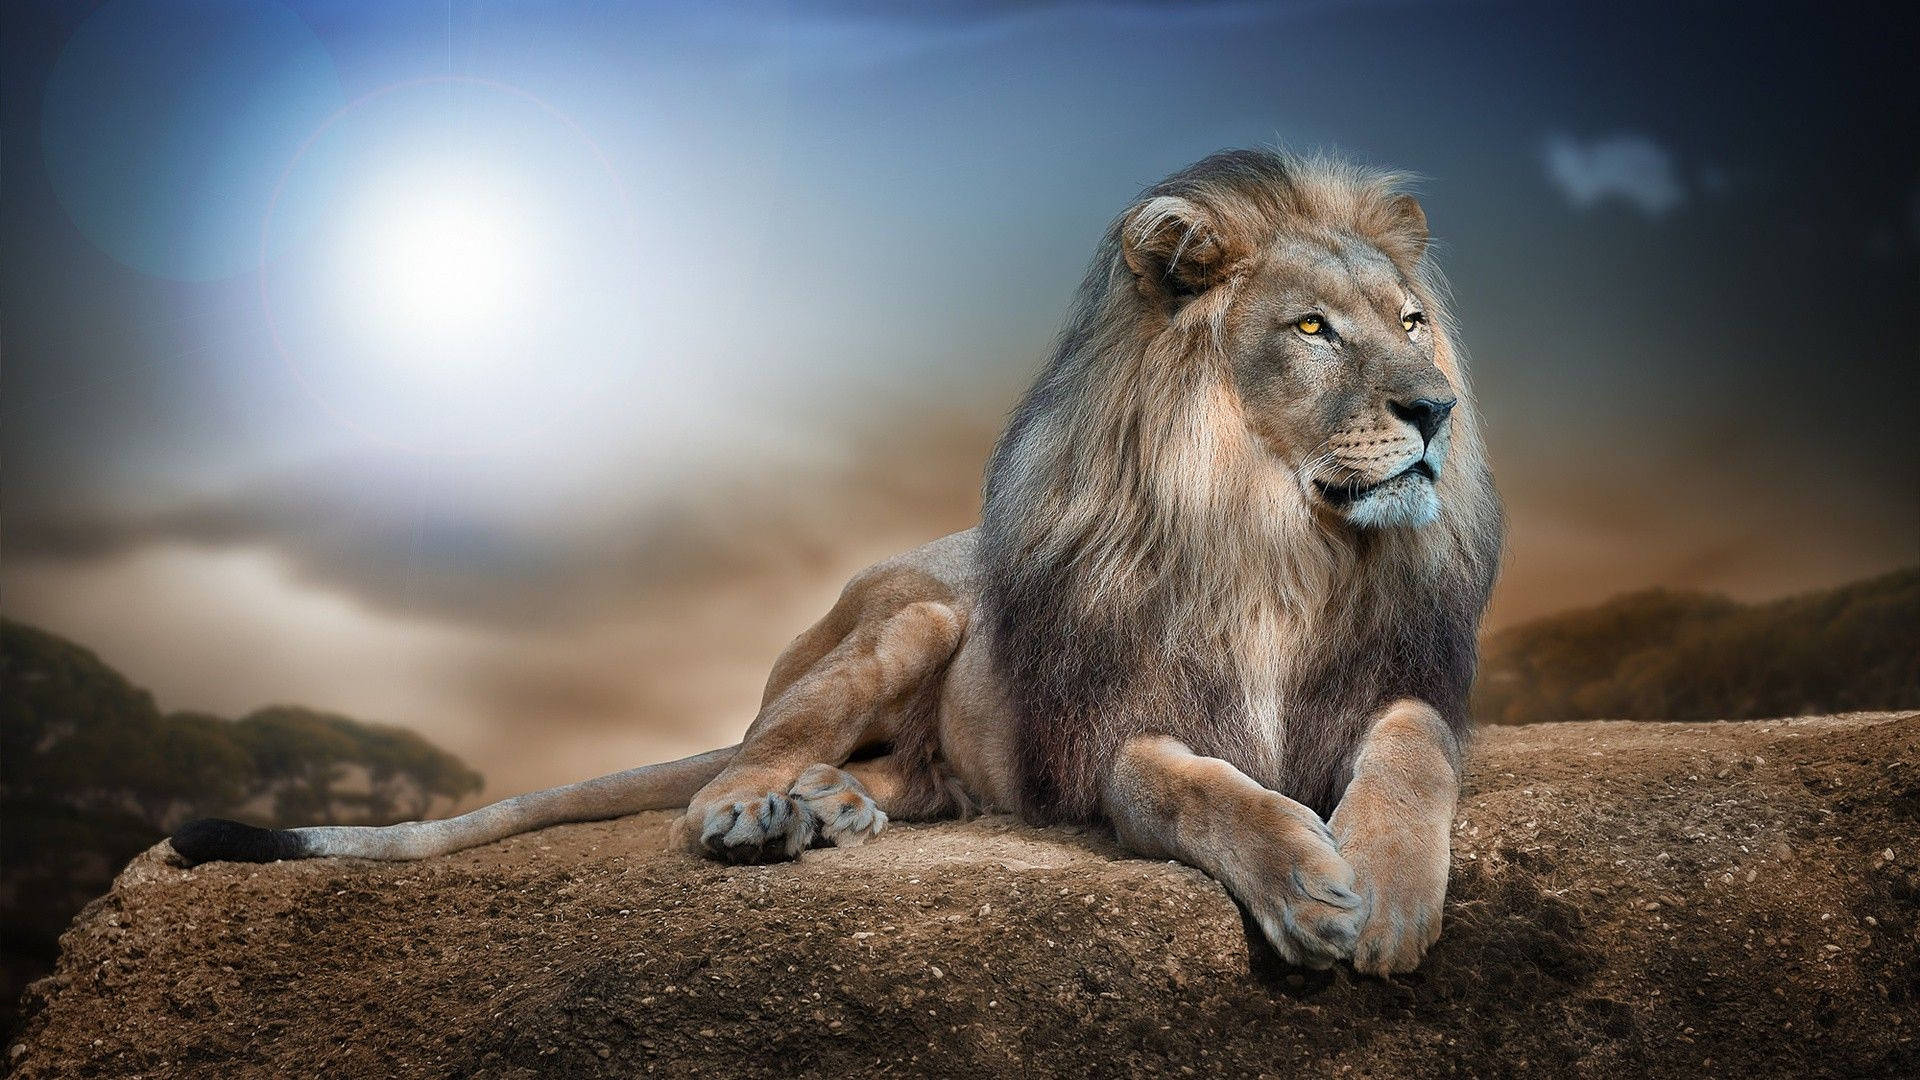 Wild Animal Lion Digital Edit Wallpaper